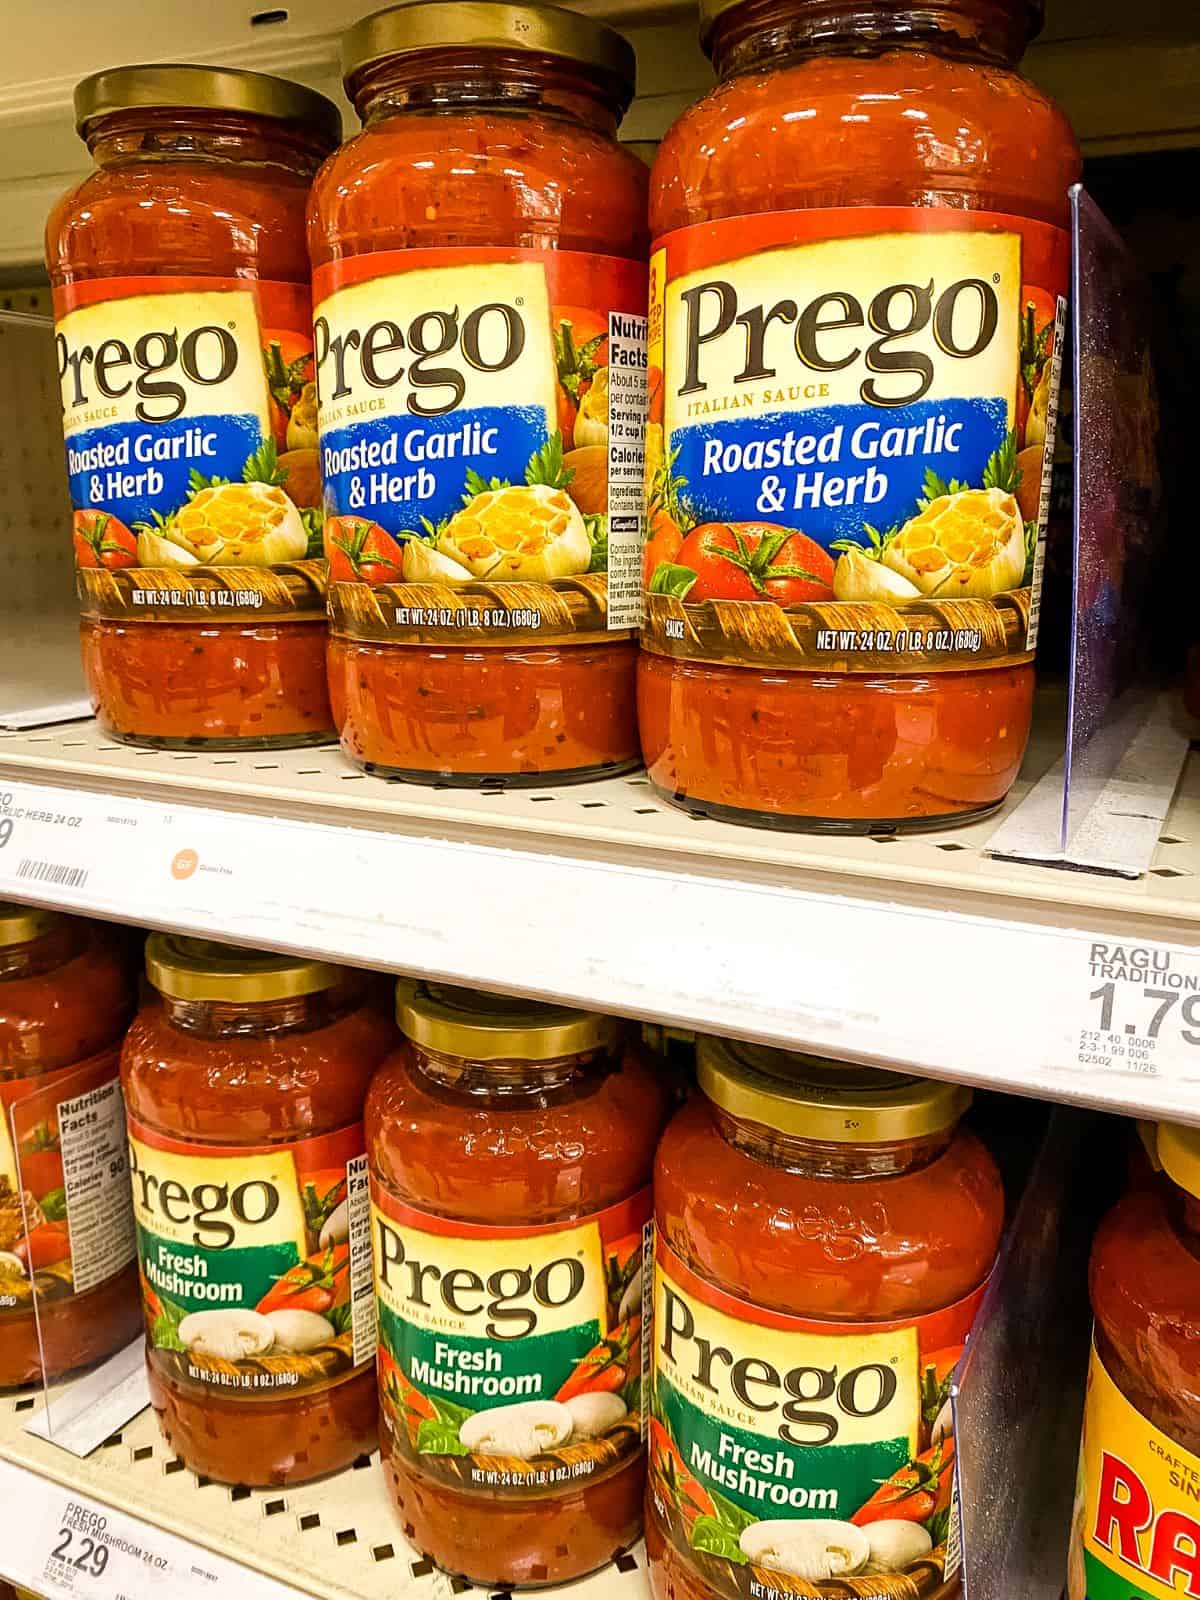 Prego Tomato Sauce on supermarket shelves.